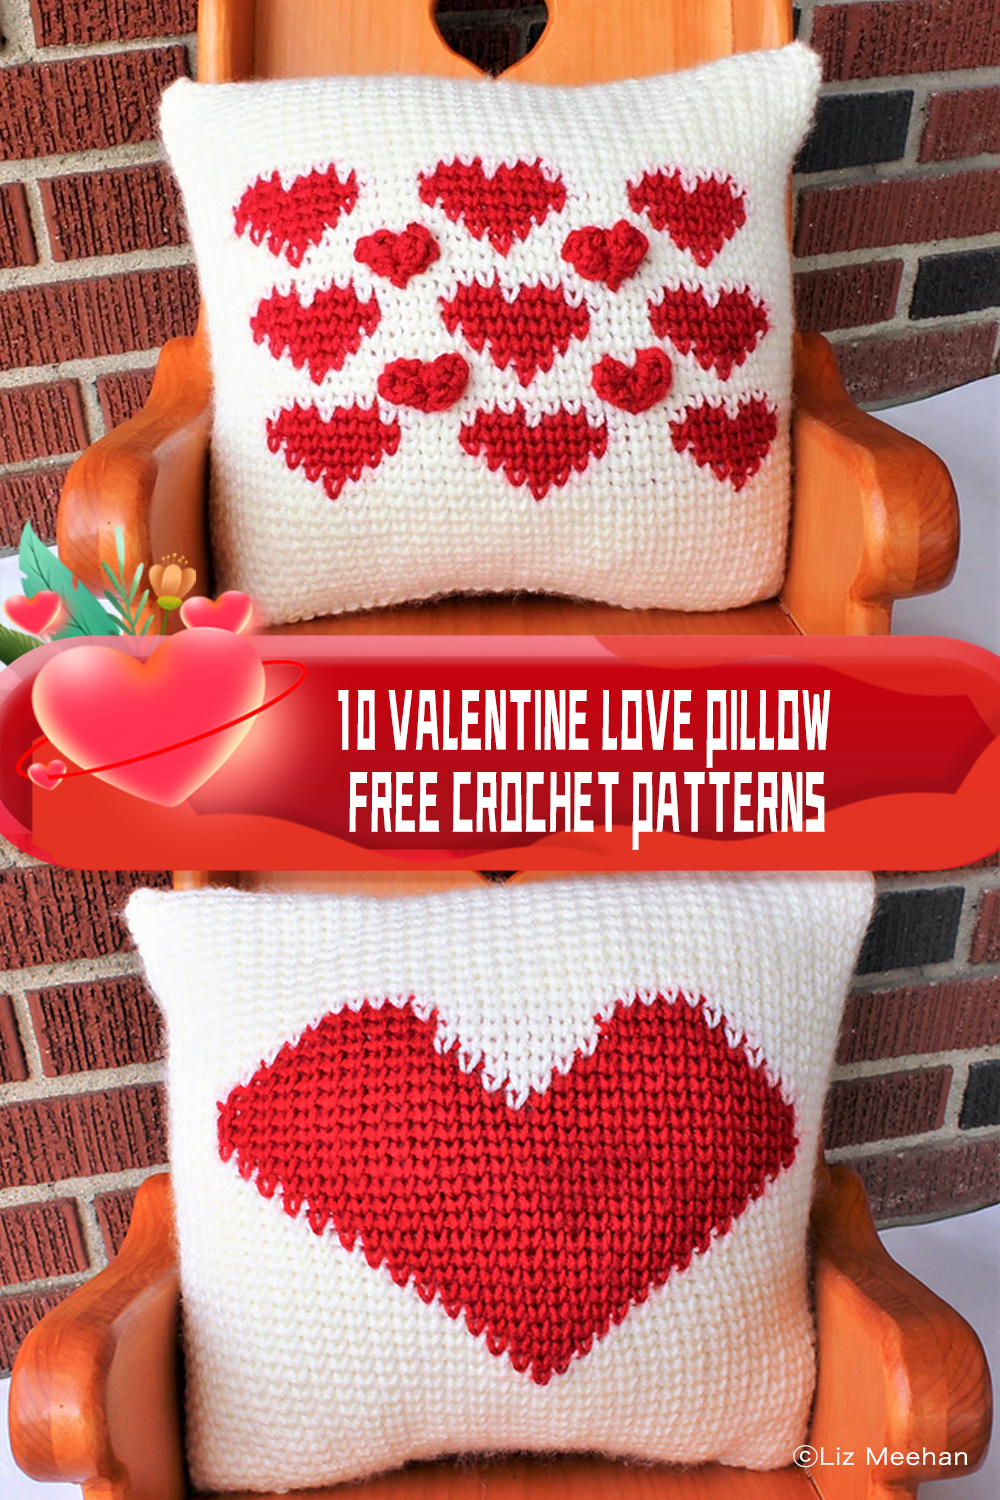 10 Valentine Love Pillow FREE Crochet Patterns